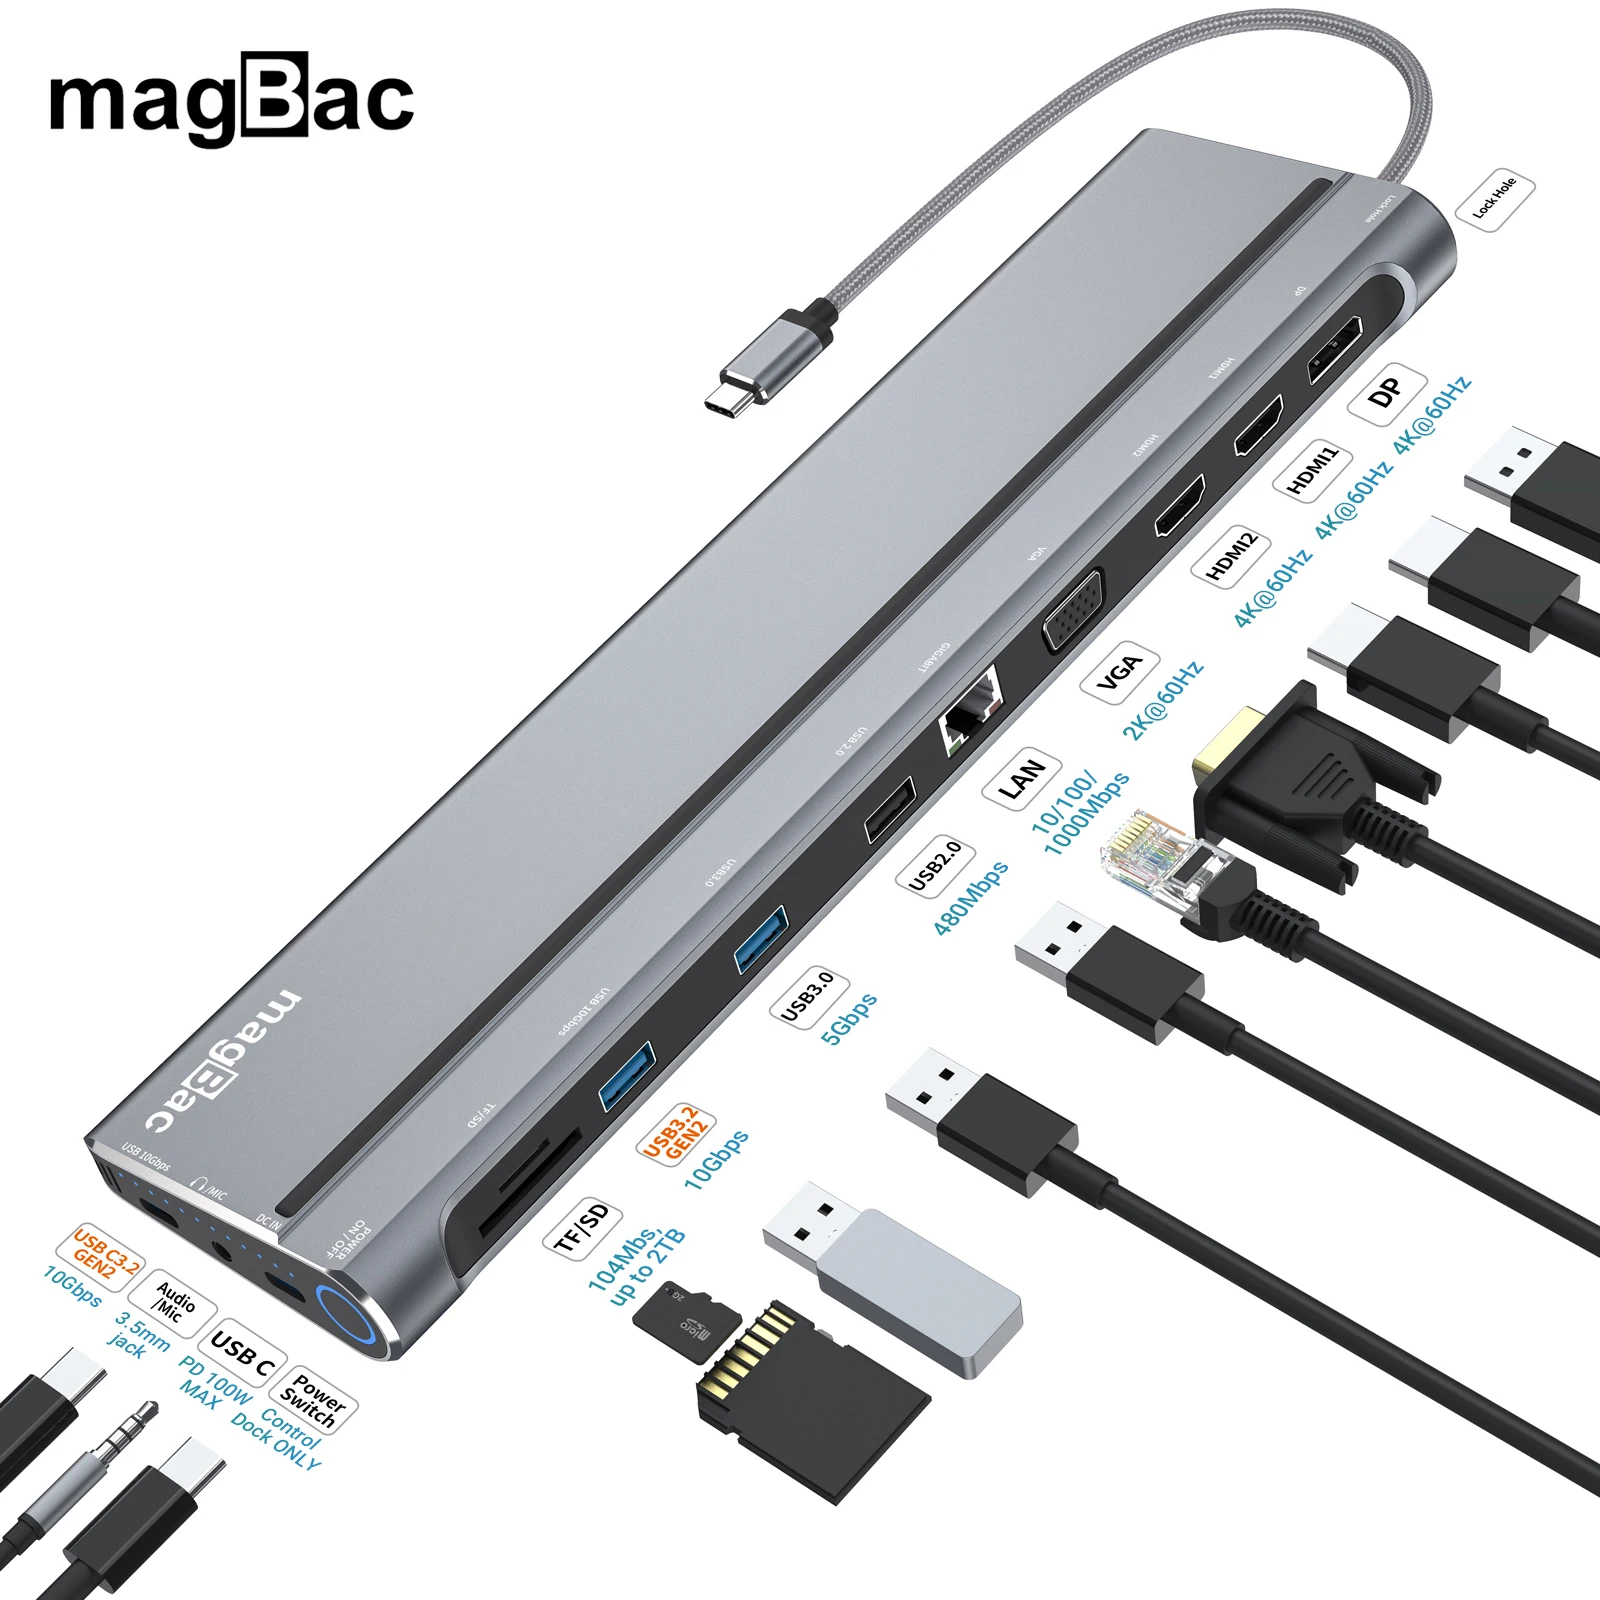 

magBac Extensor USB Hub 14 Ports USB C to HDMI 4K 60Hz Triple Display Dock Station Dual Monitor Laptop Adapter for MacOS Windows